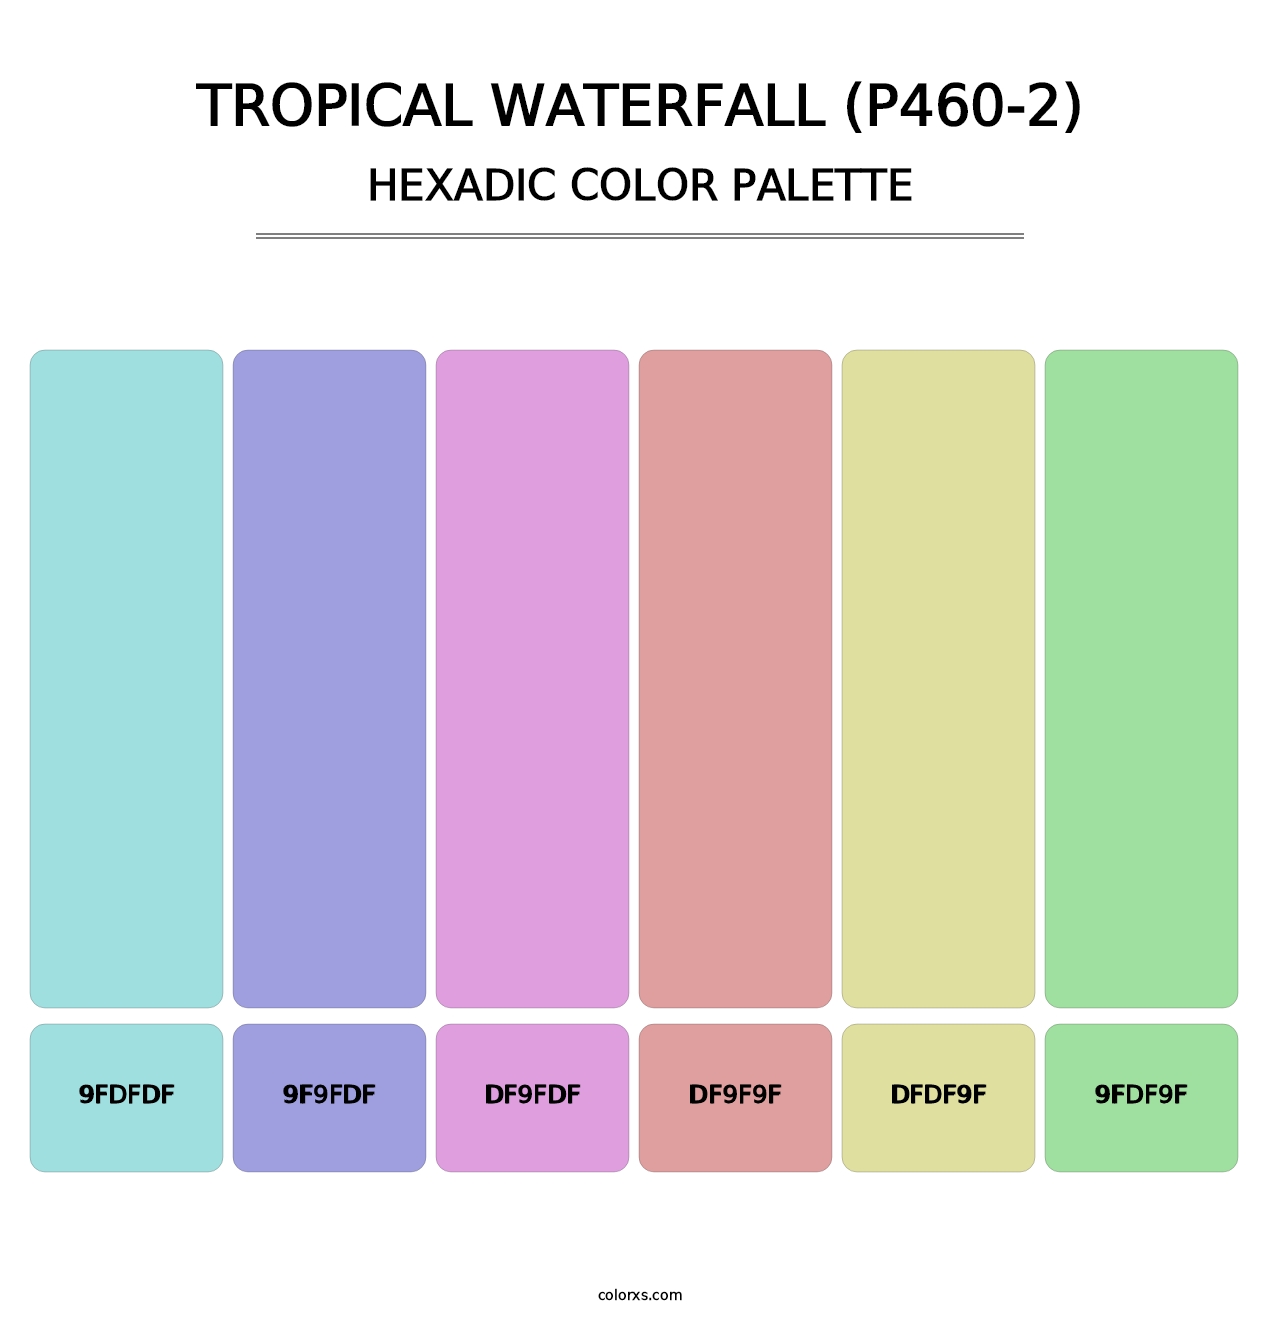 Tropical Waterfall (P460-2) - Hexadic Color Palette